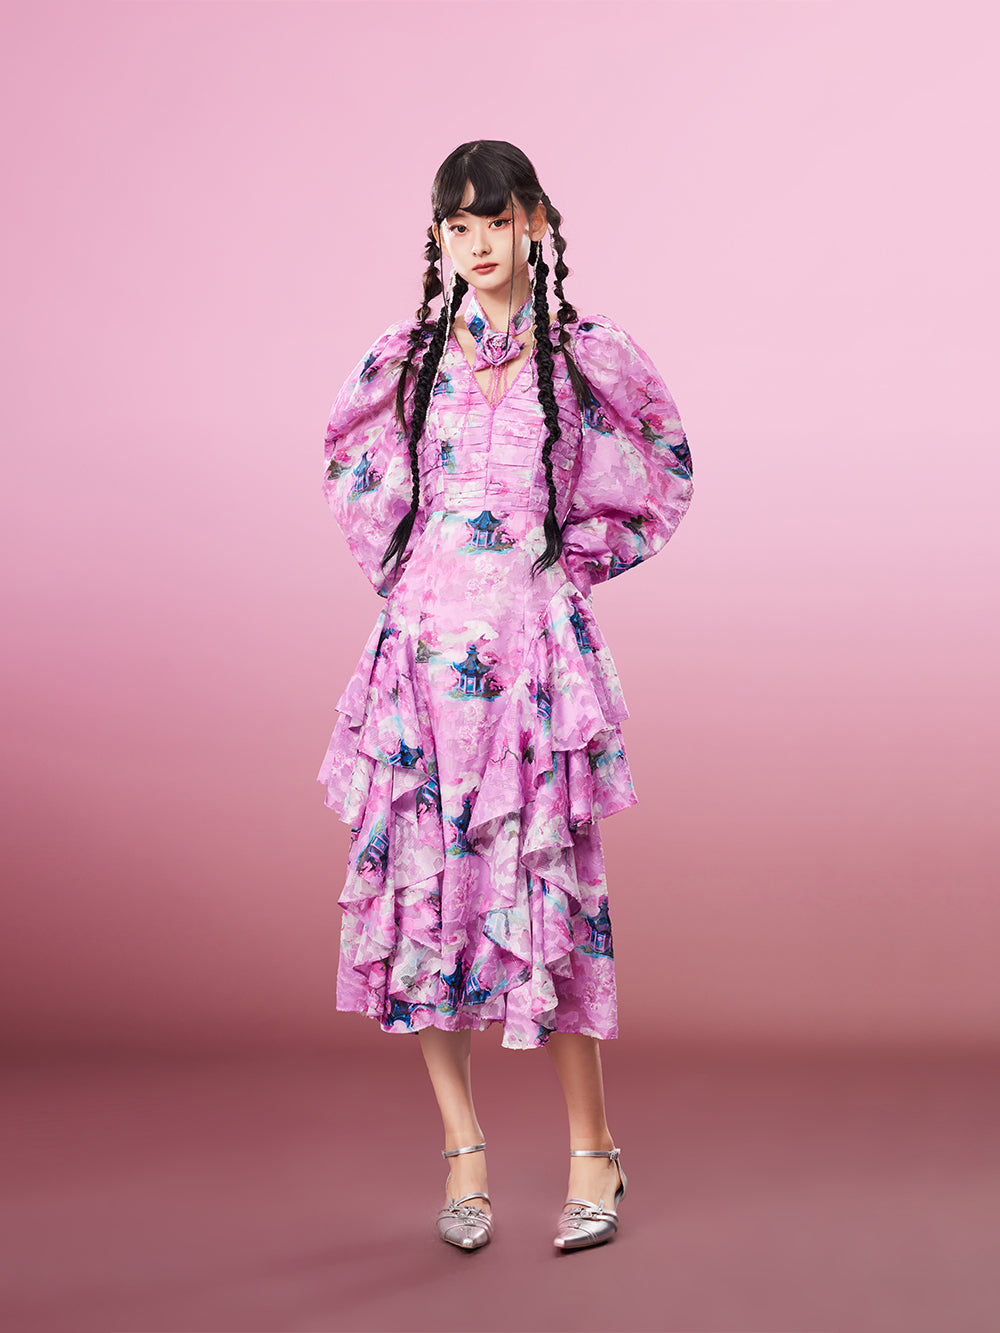 MUKZIN Chiffon Age-reducing Print Elegant Retro Dress